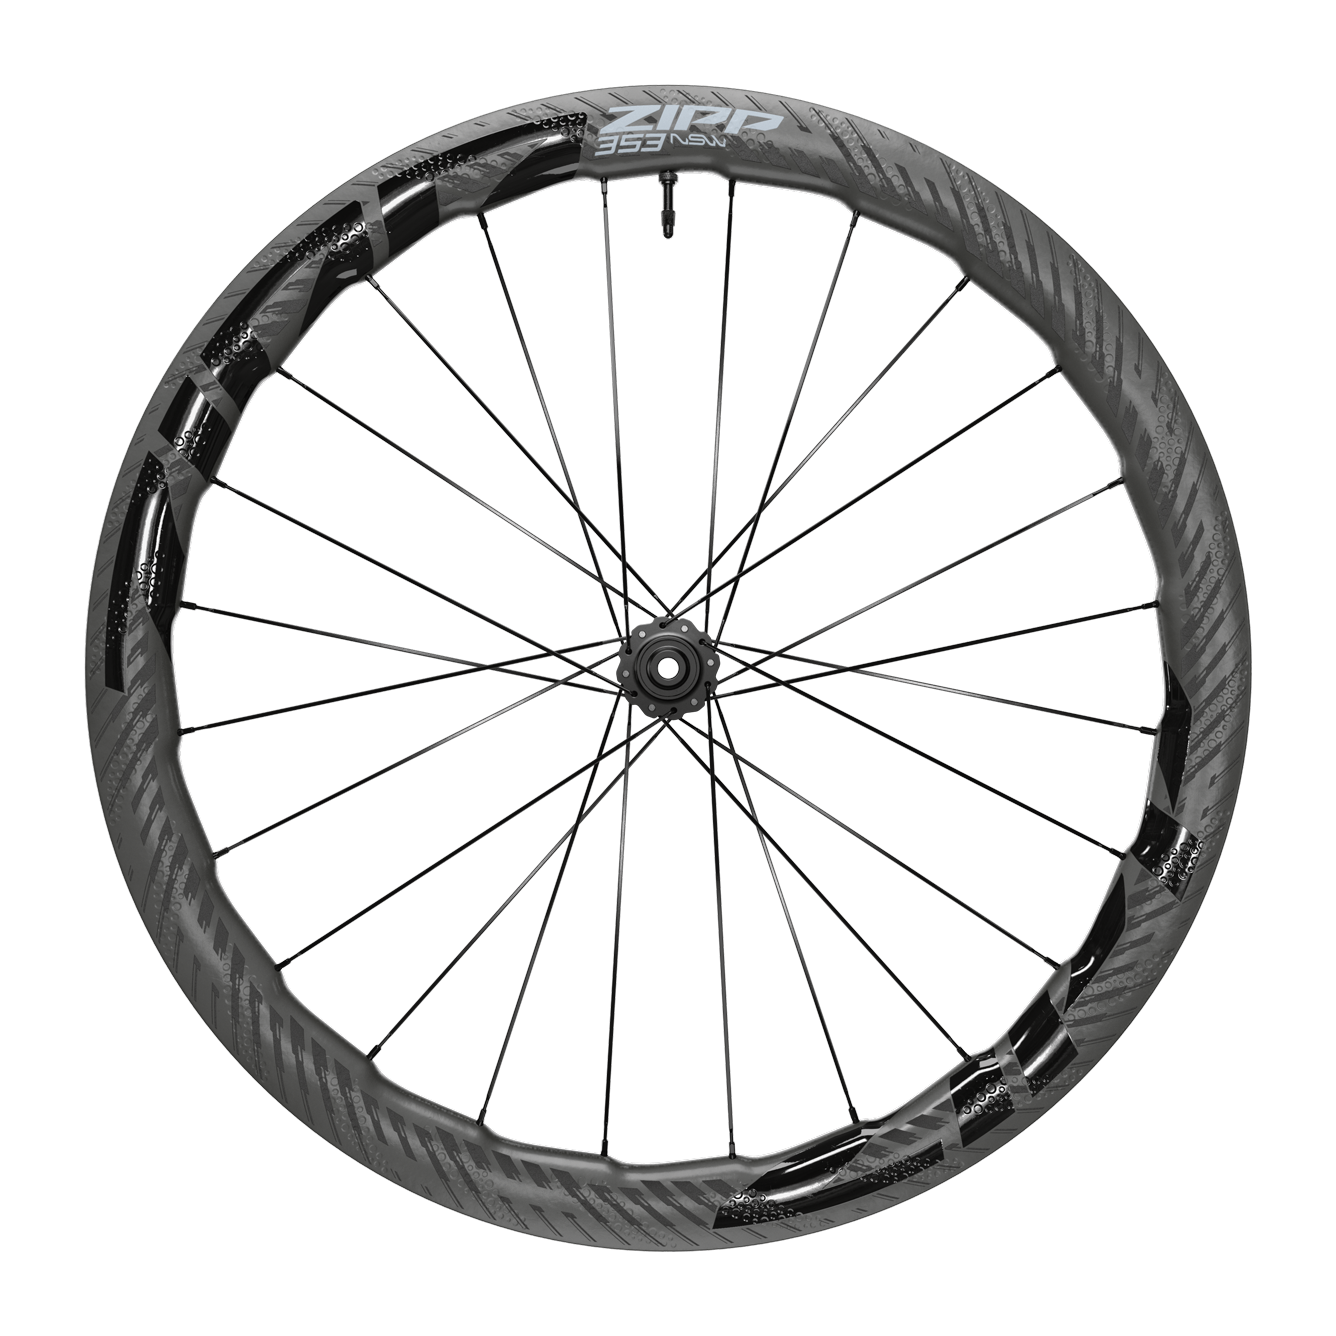 ZIPP 353 NSW Disc 700c Carbon Wheelset